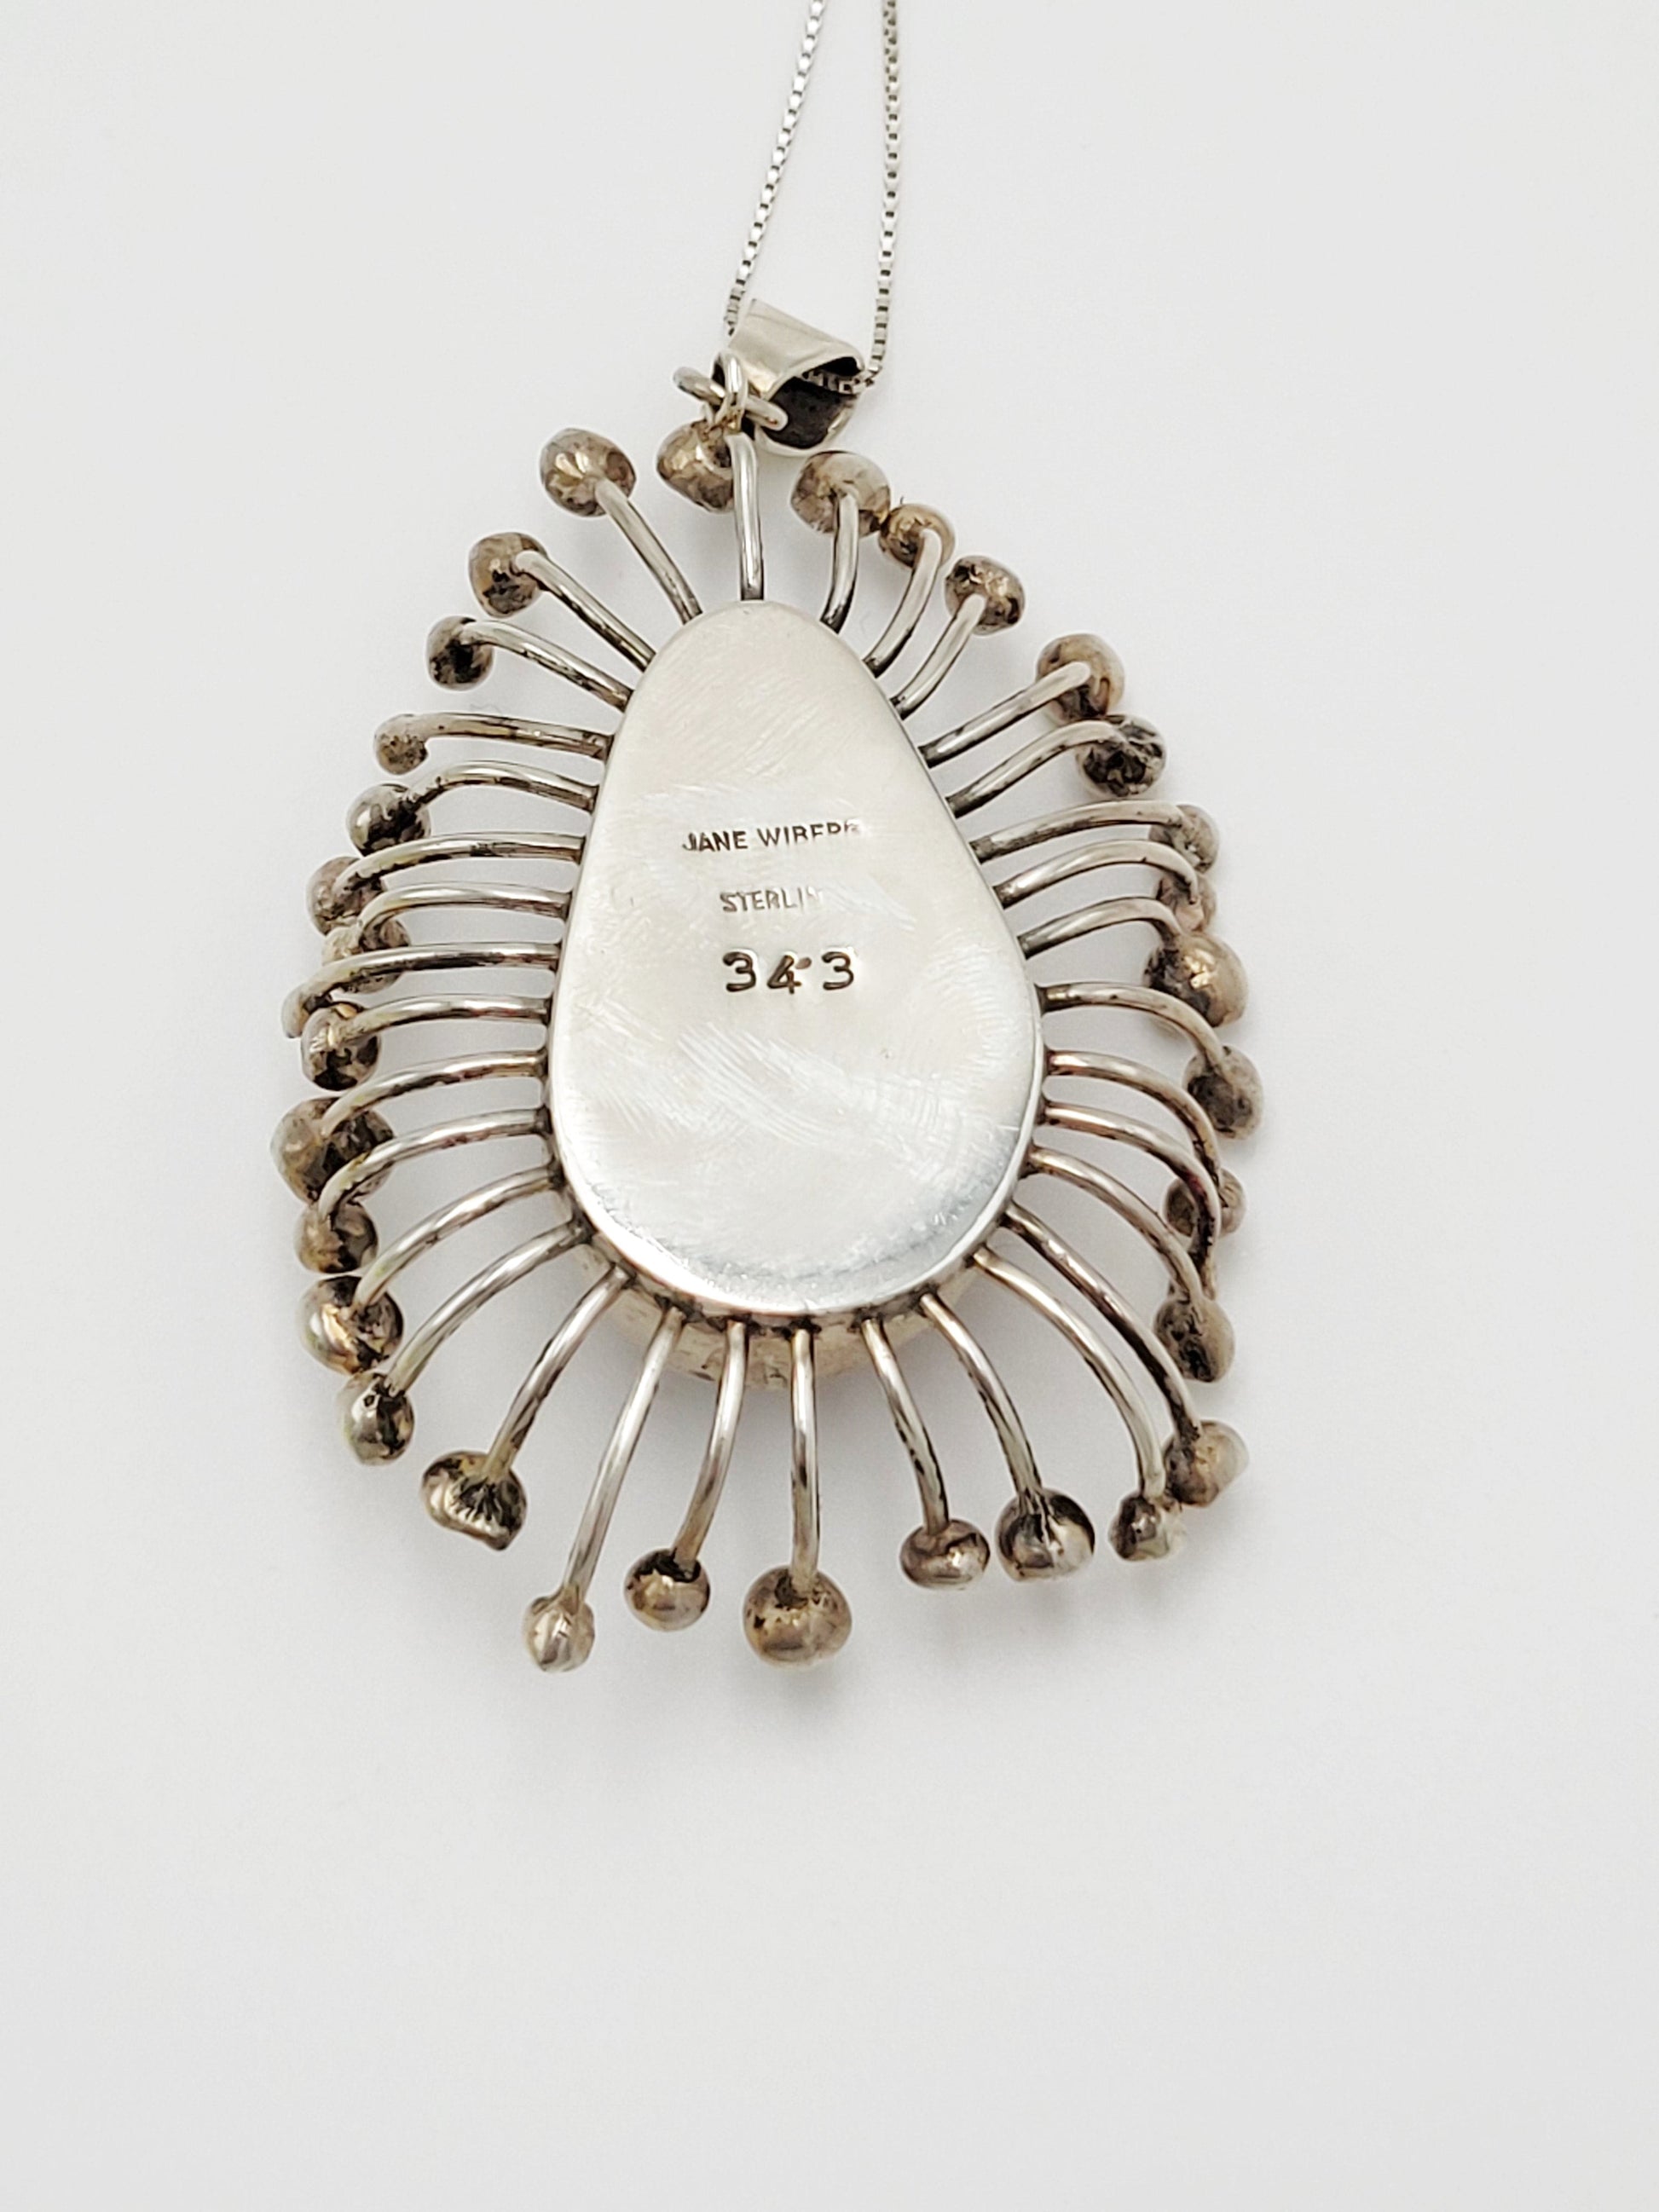 Jane Wiberg Jewelry Superb Rare Danish Jane Wiberg Sterling & Quartz Necklace #343 Circa 1960s